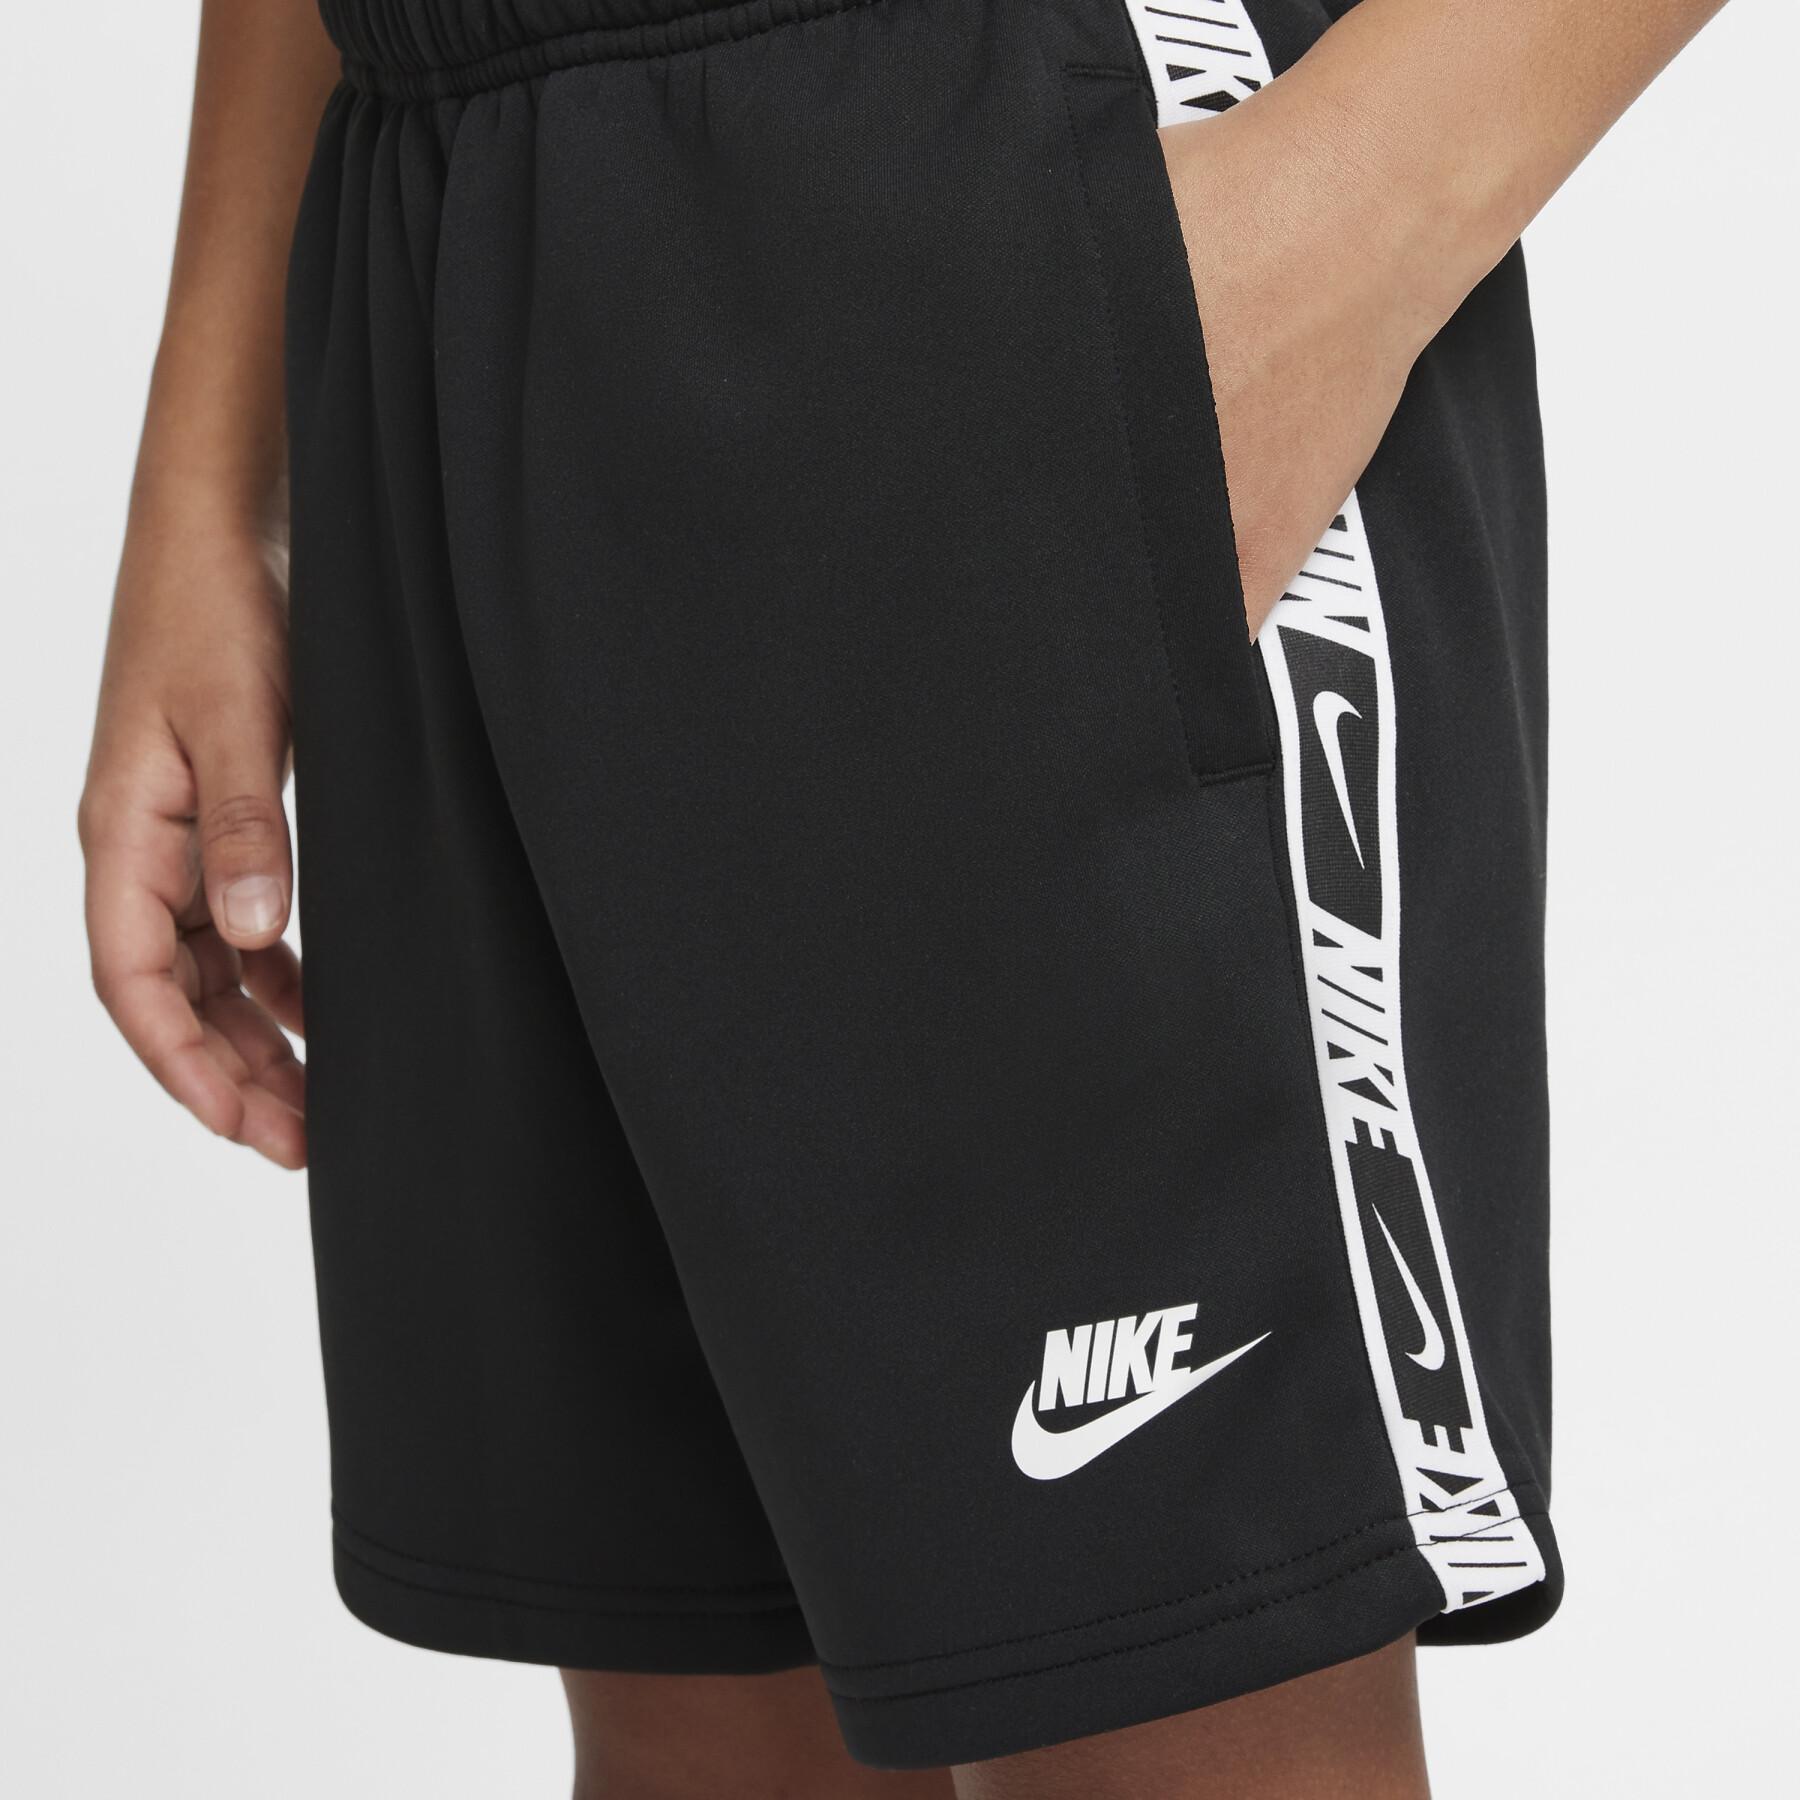 Children's shorts Nike Repeat